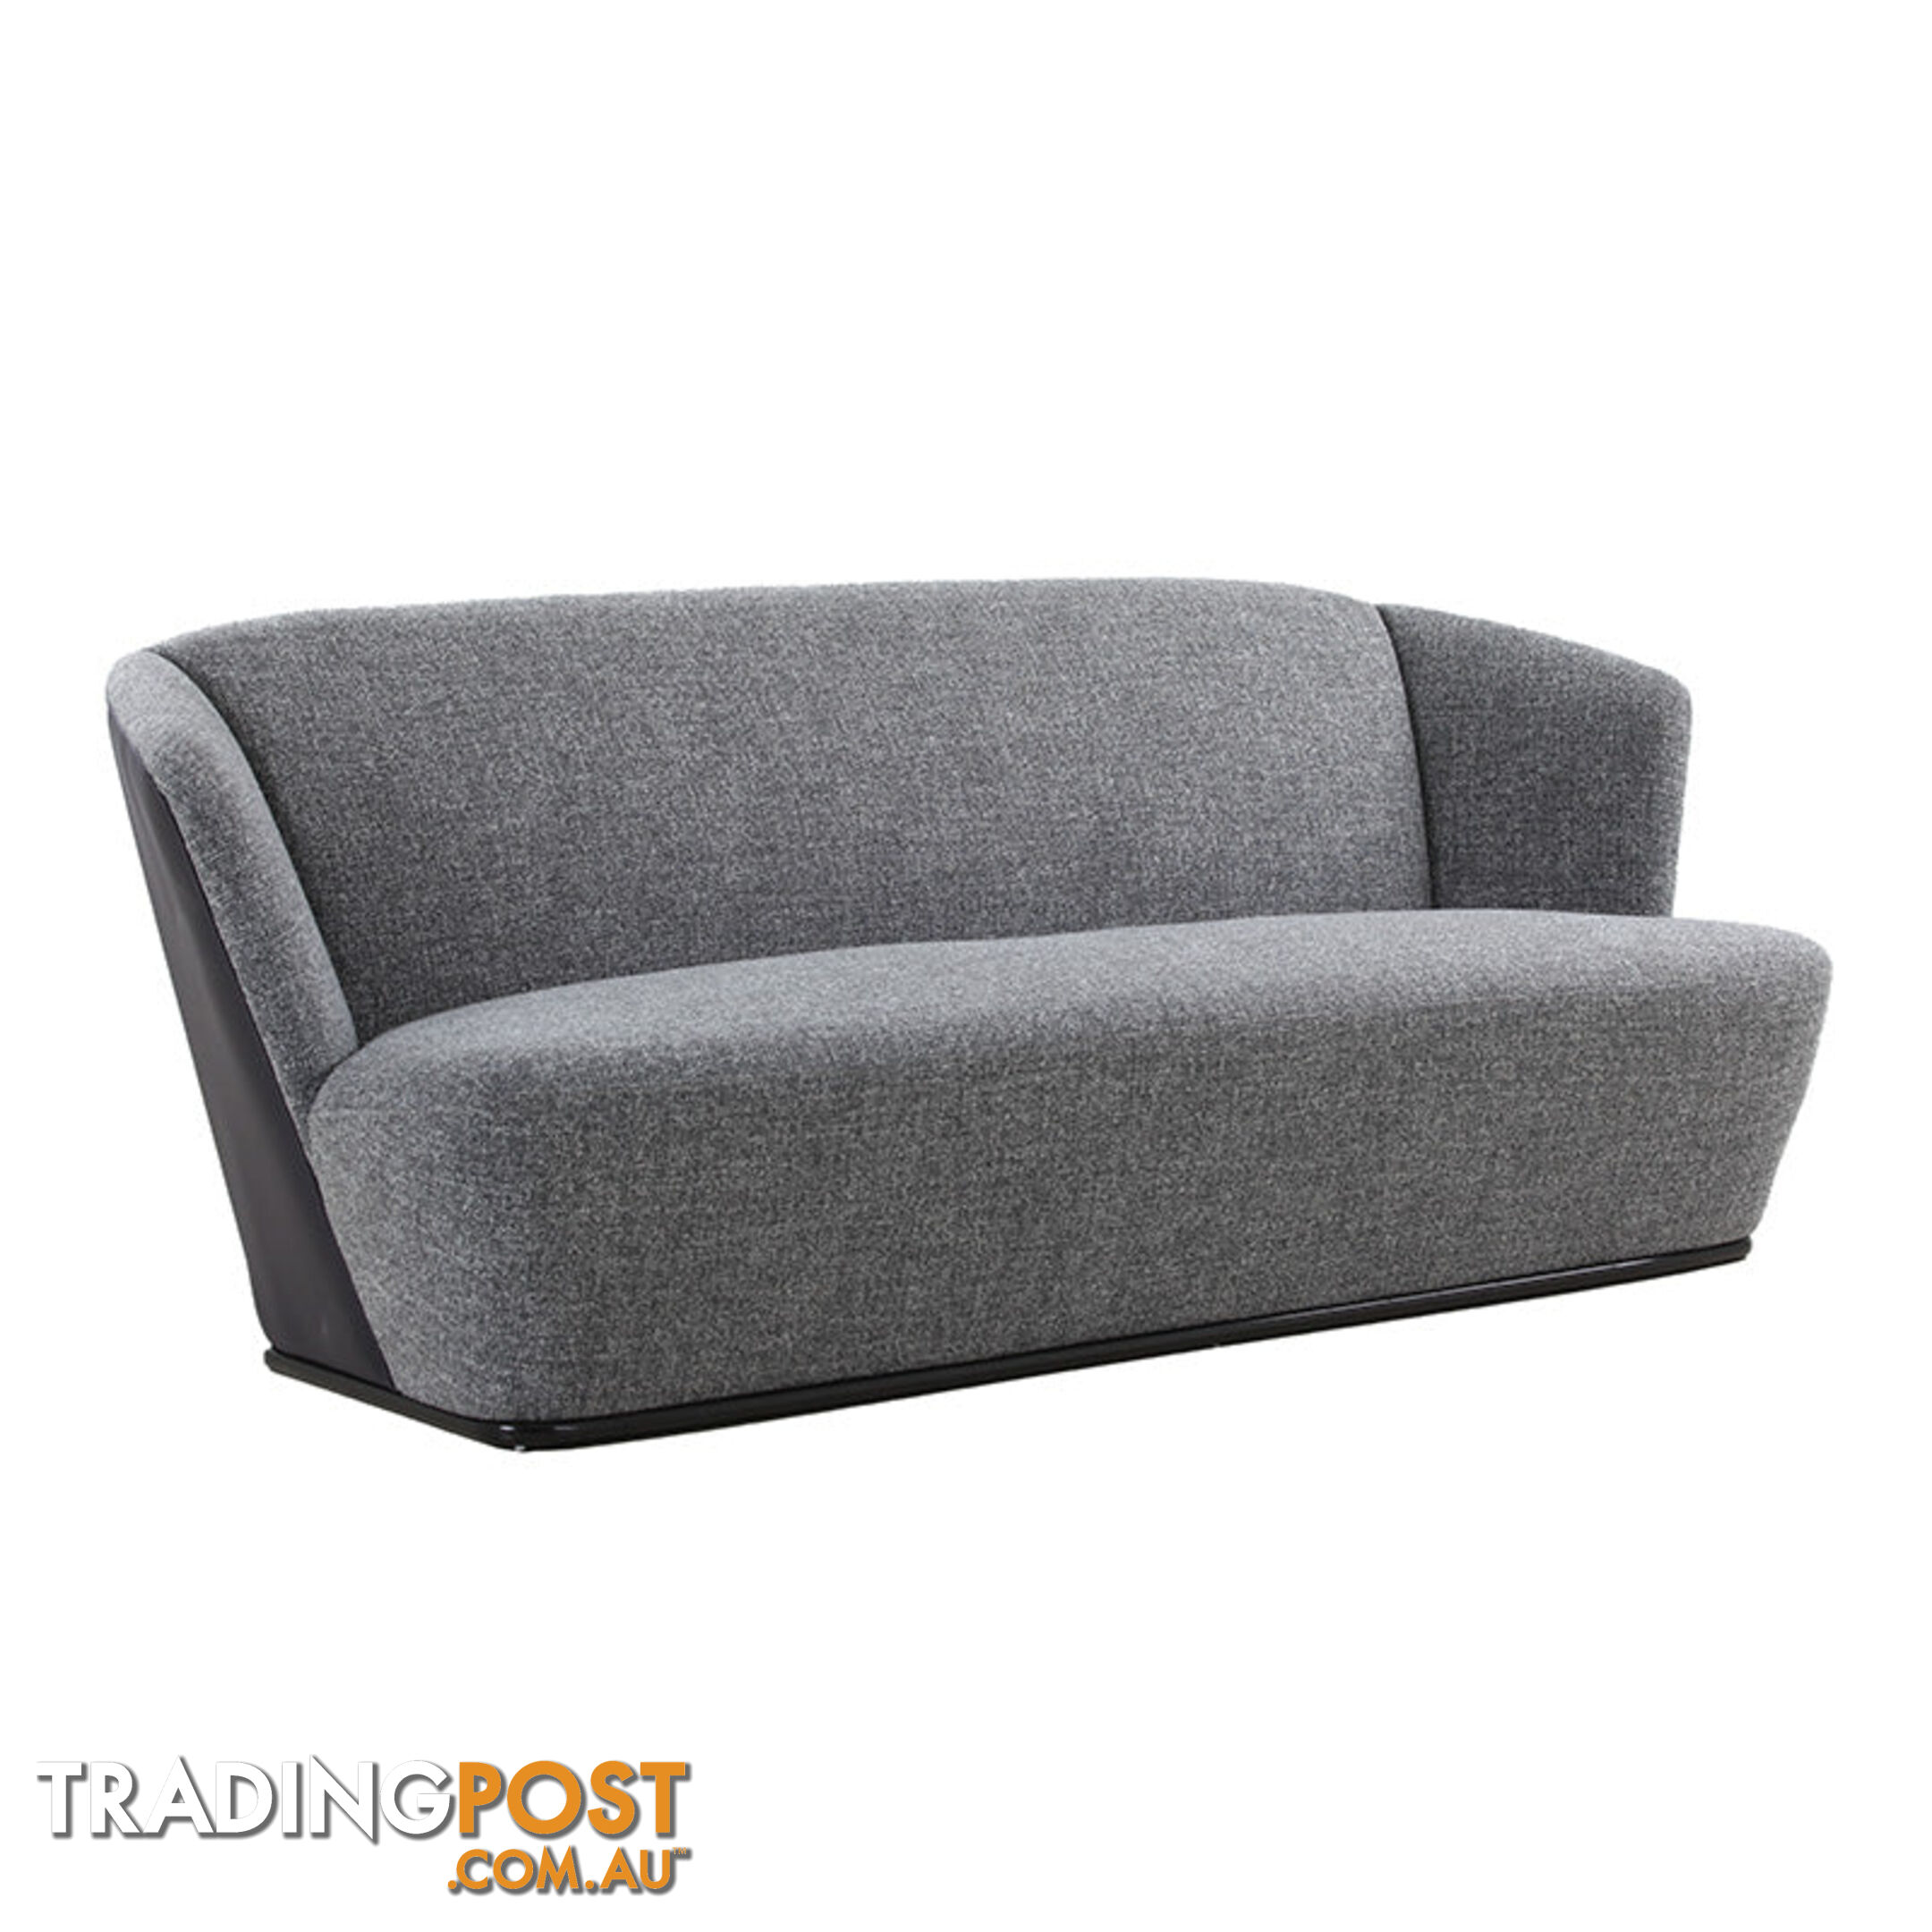 ASTRID 3 Seater Sofa - Grey - DI-NC4005 - 9334719011806